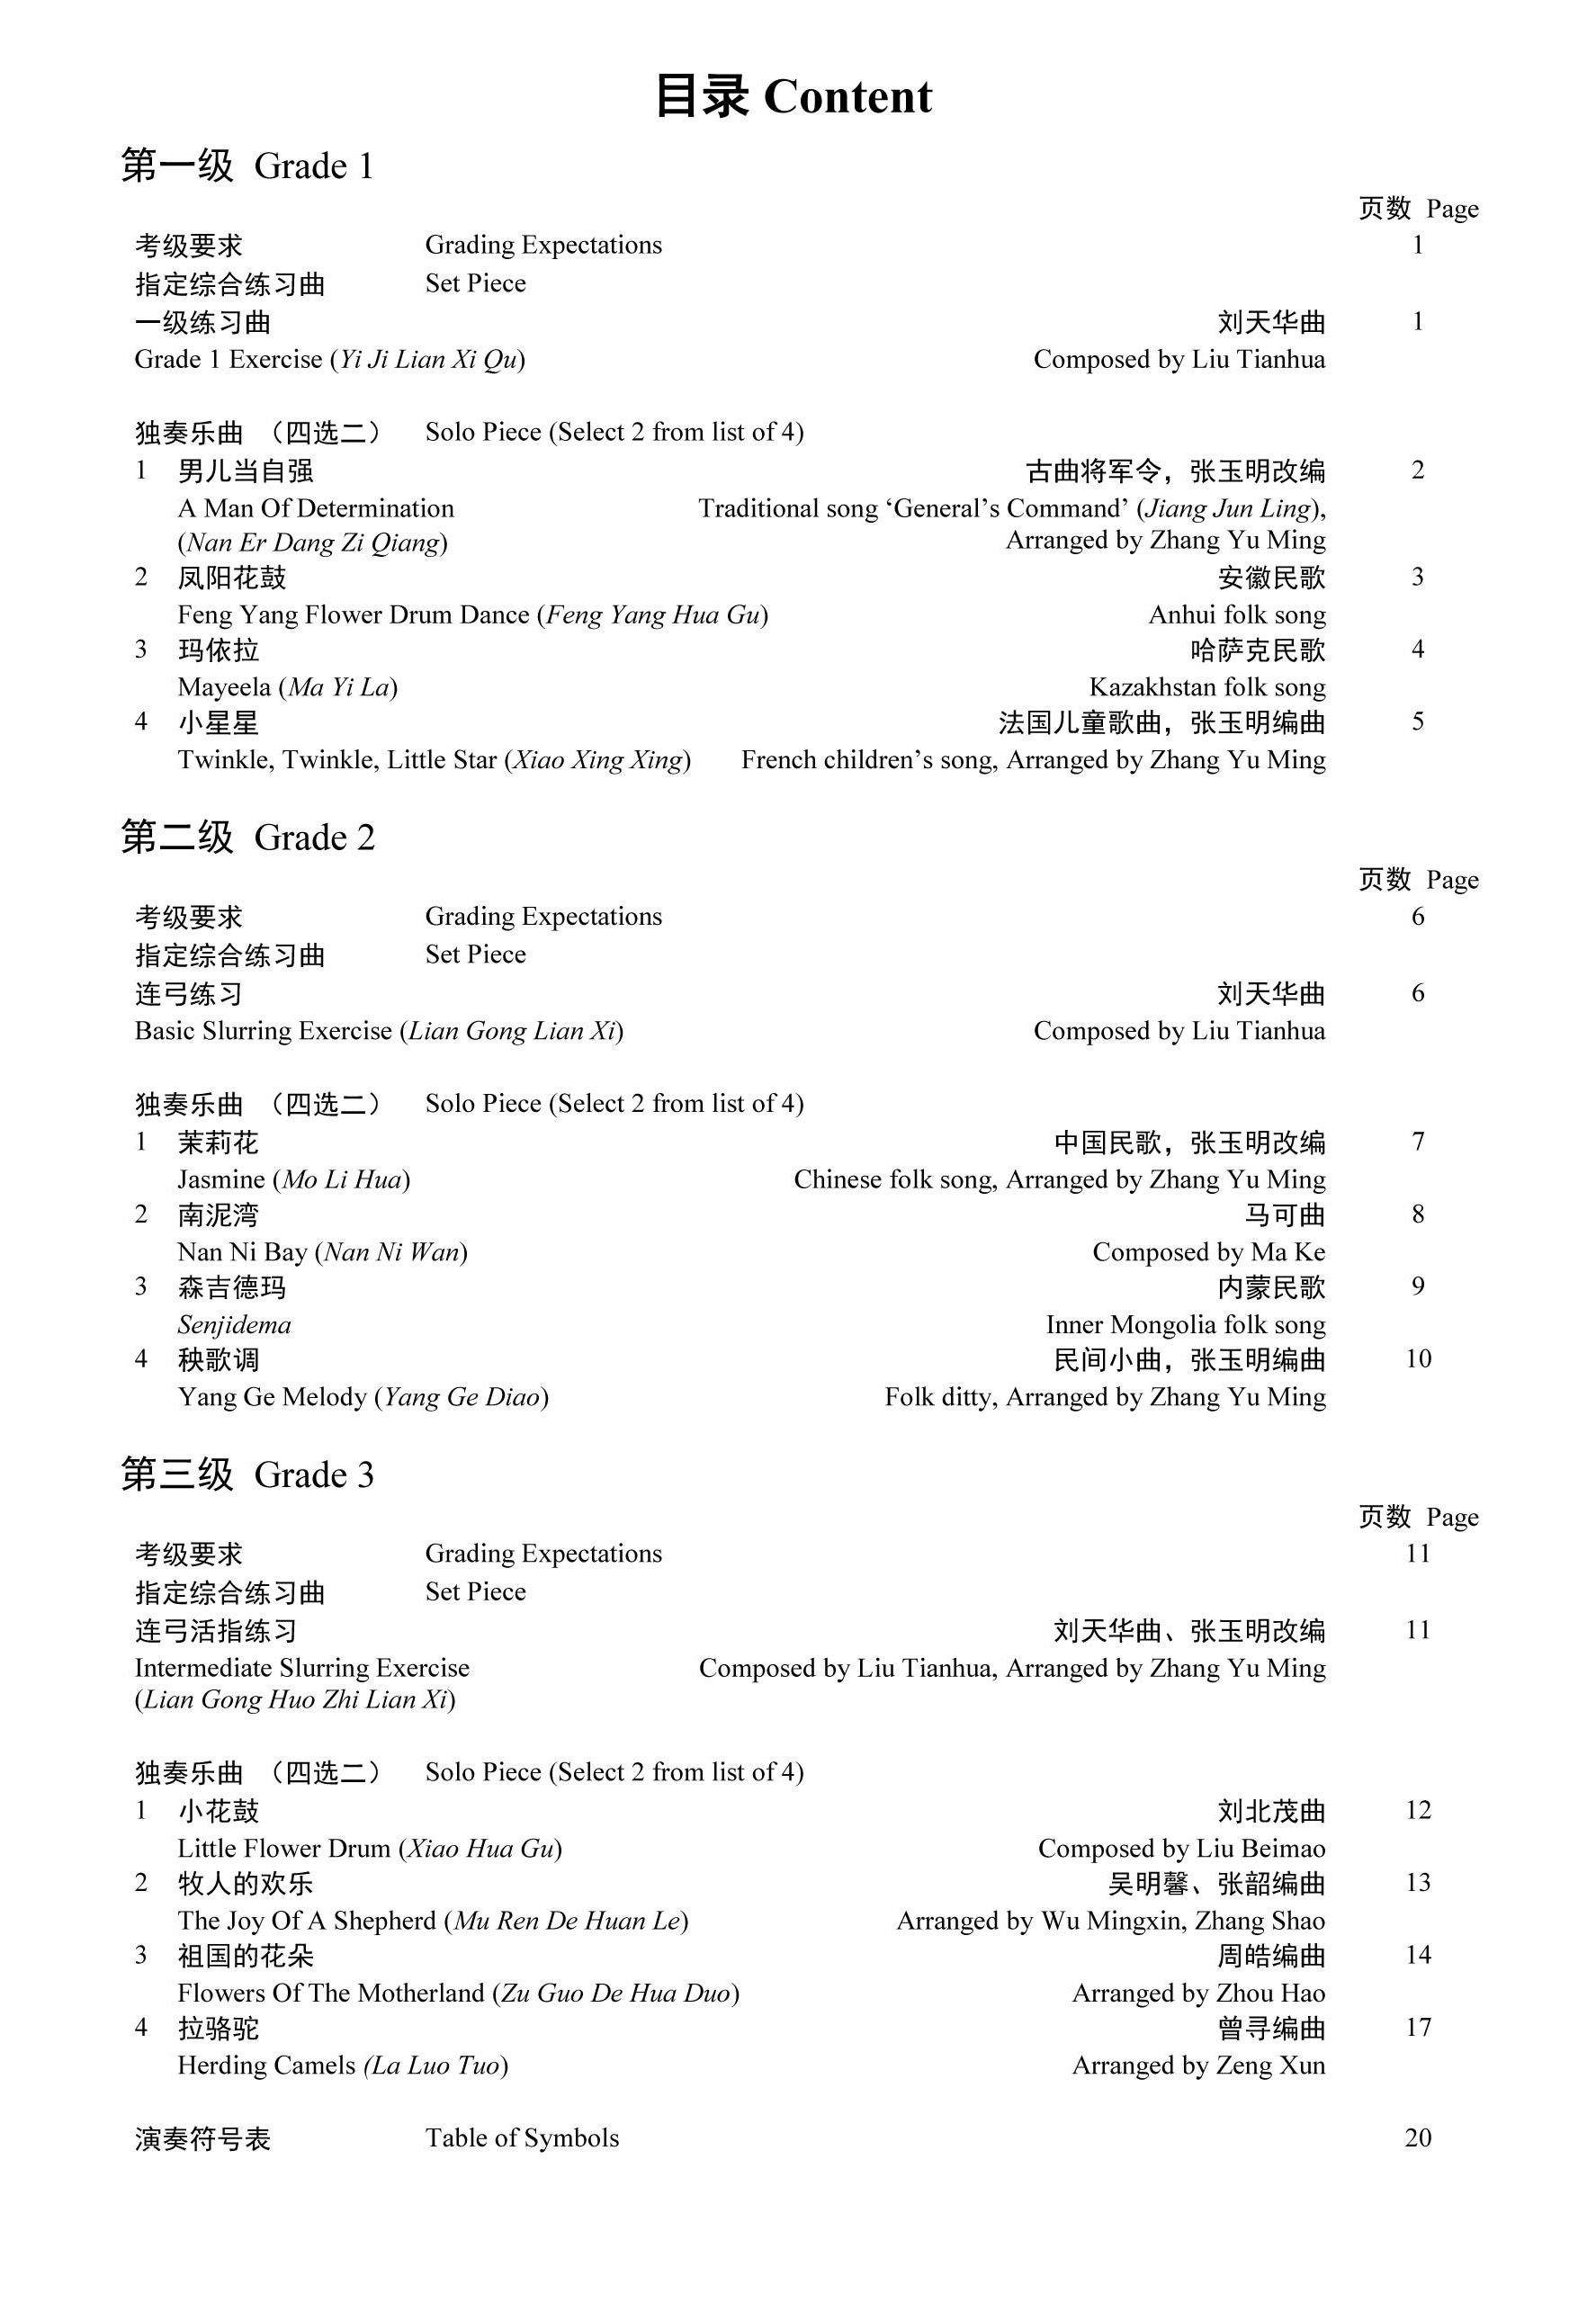 Erhu Grading Examination Book by Teng Beginner Grade 1-3 Content Page